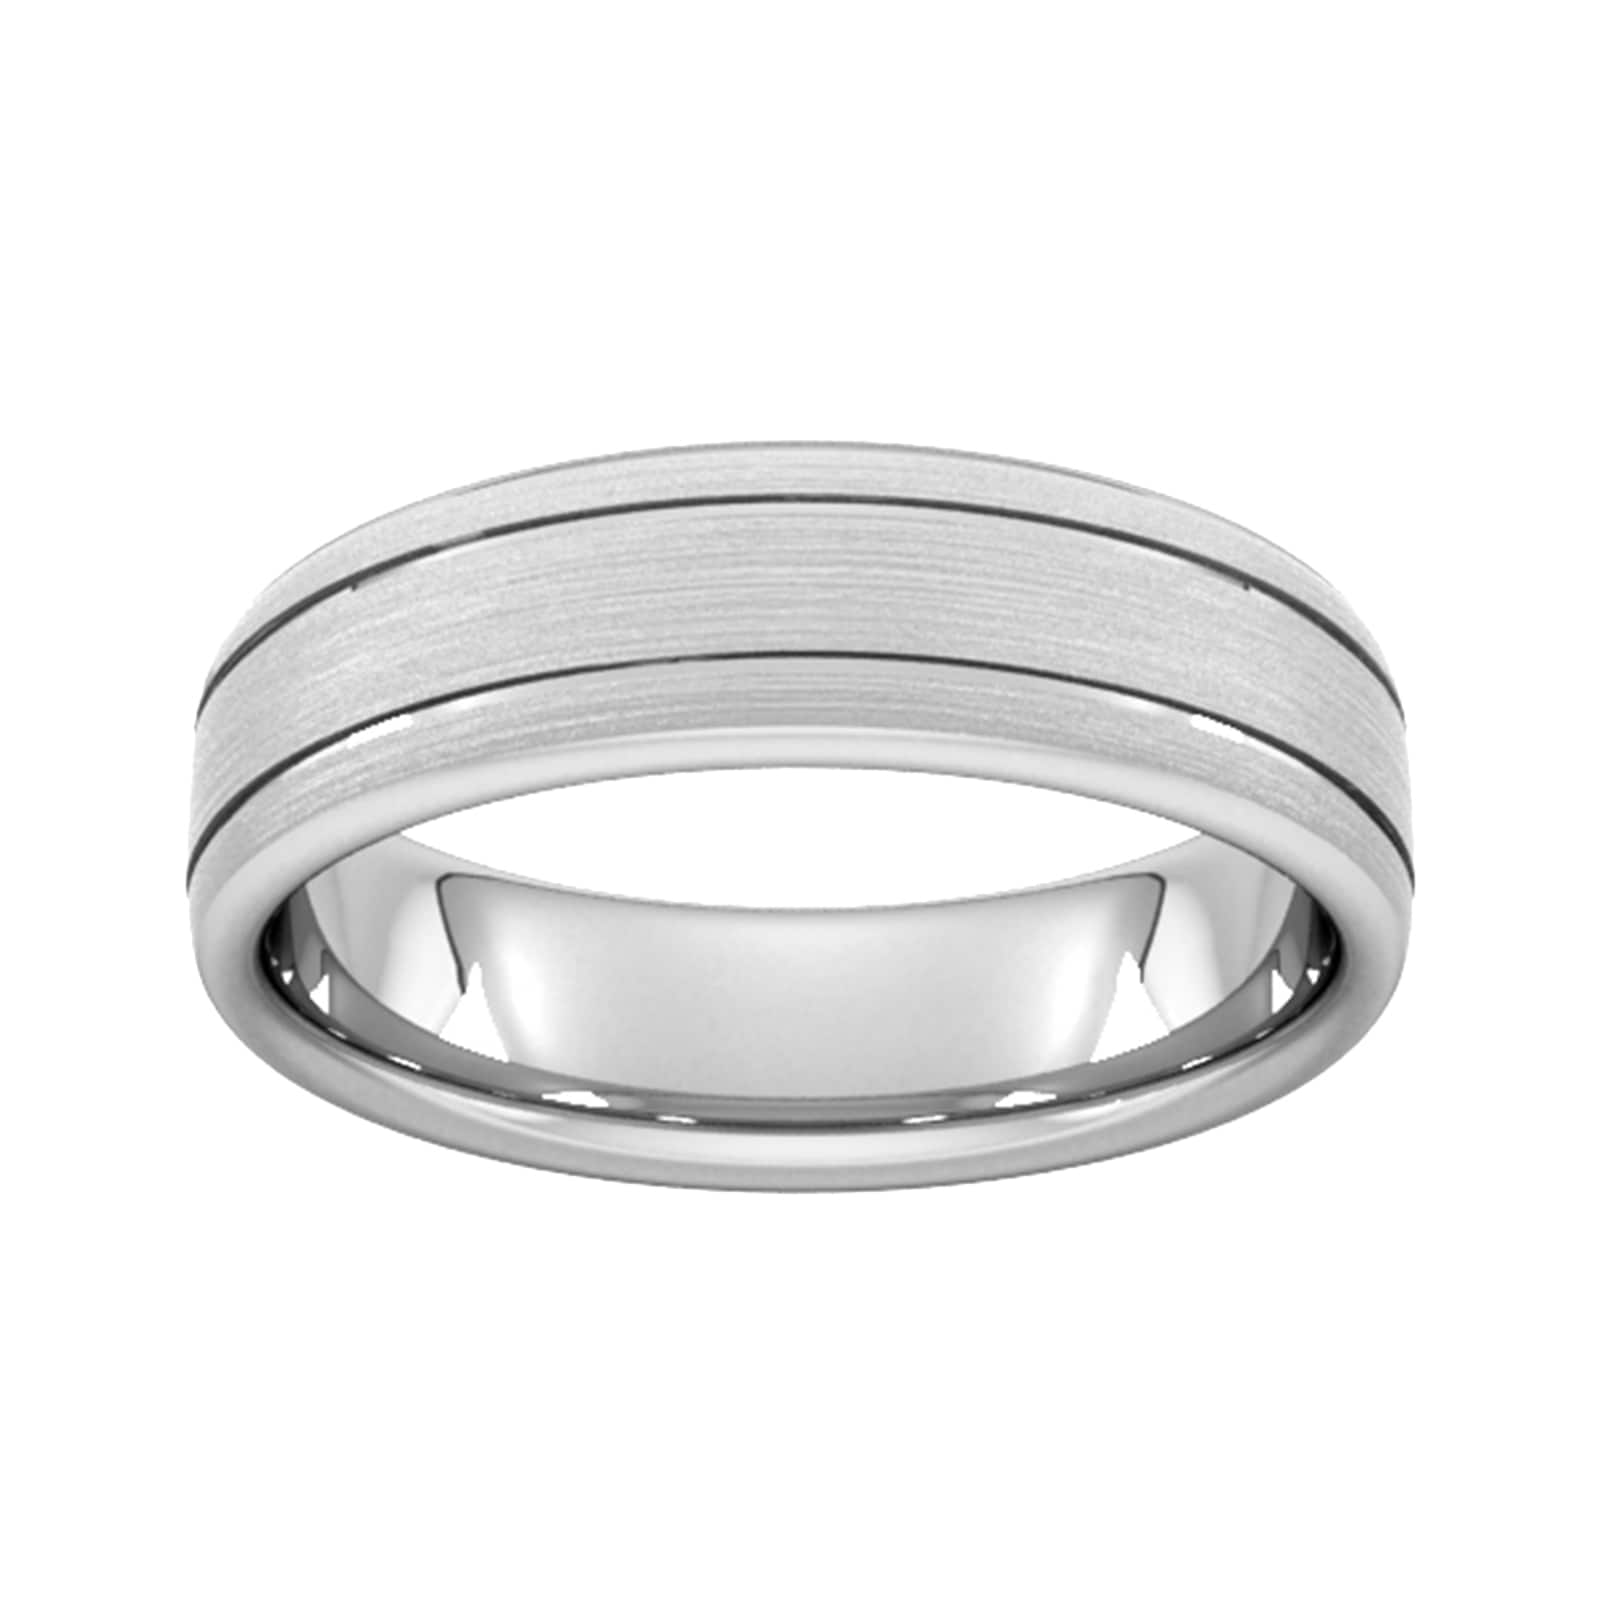 6mm Slight Court Standard Matt Finish With Double Grooves Wedding Ring In 950 Palladium - Ring Size K